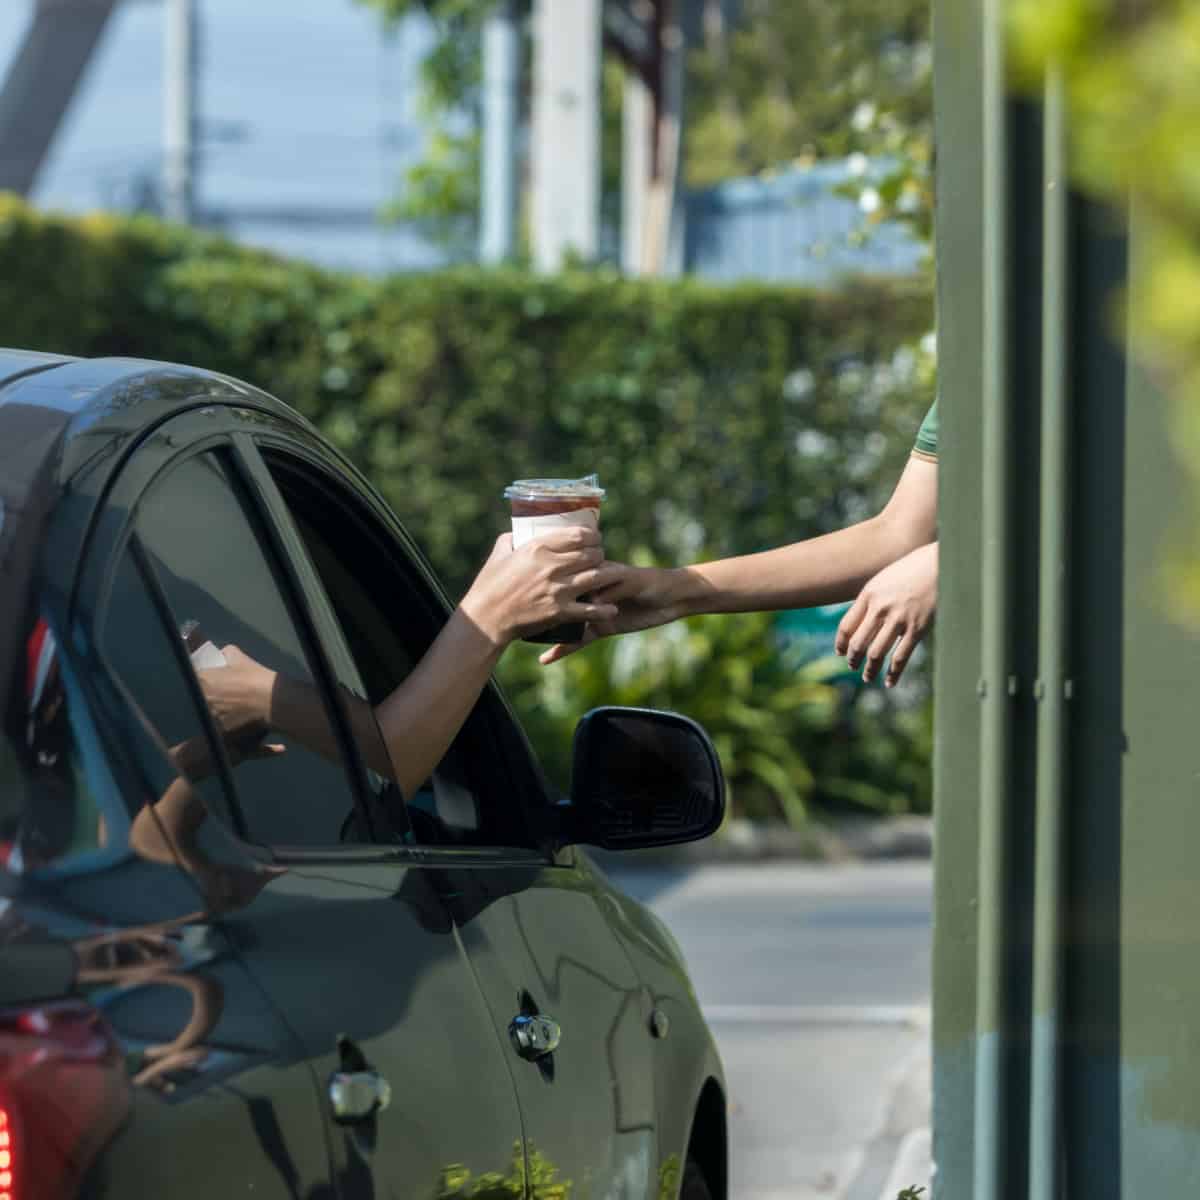 Man grabbing coffee at drive thru